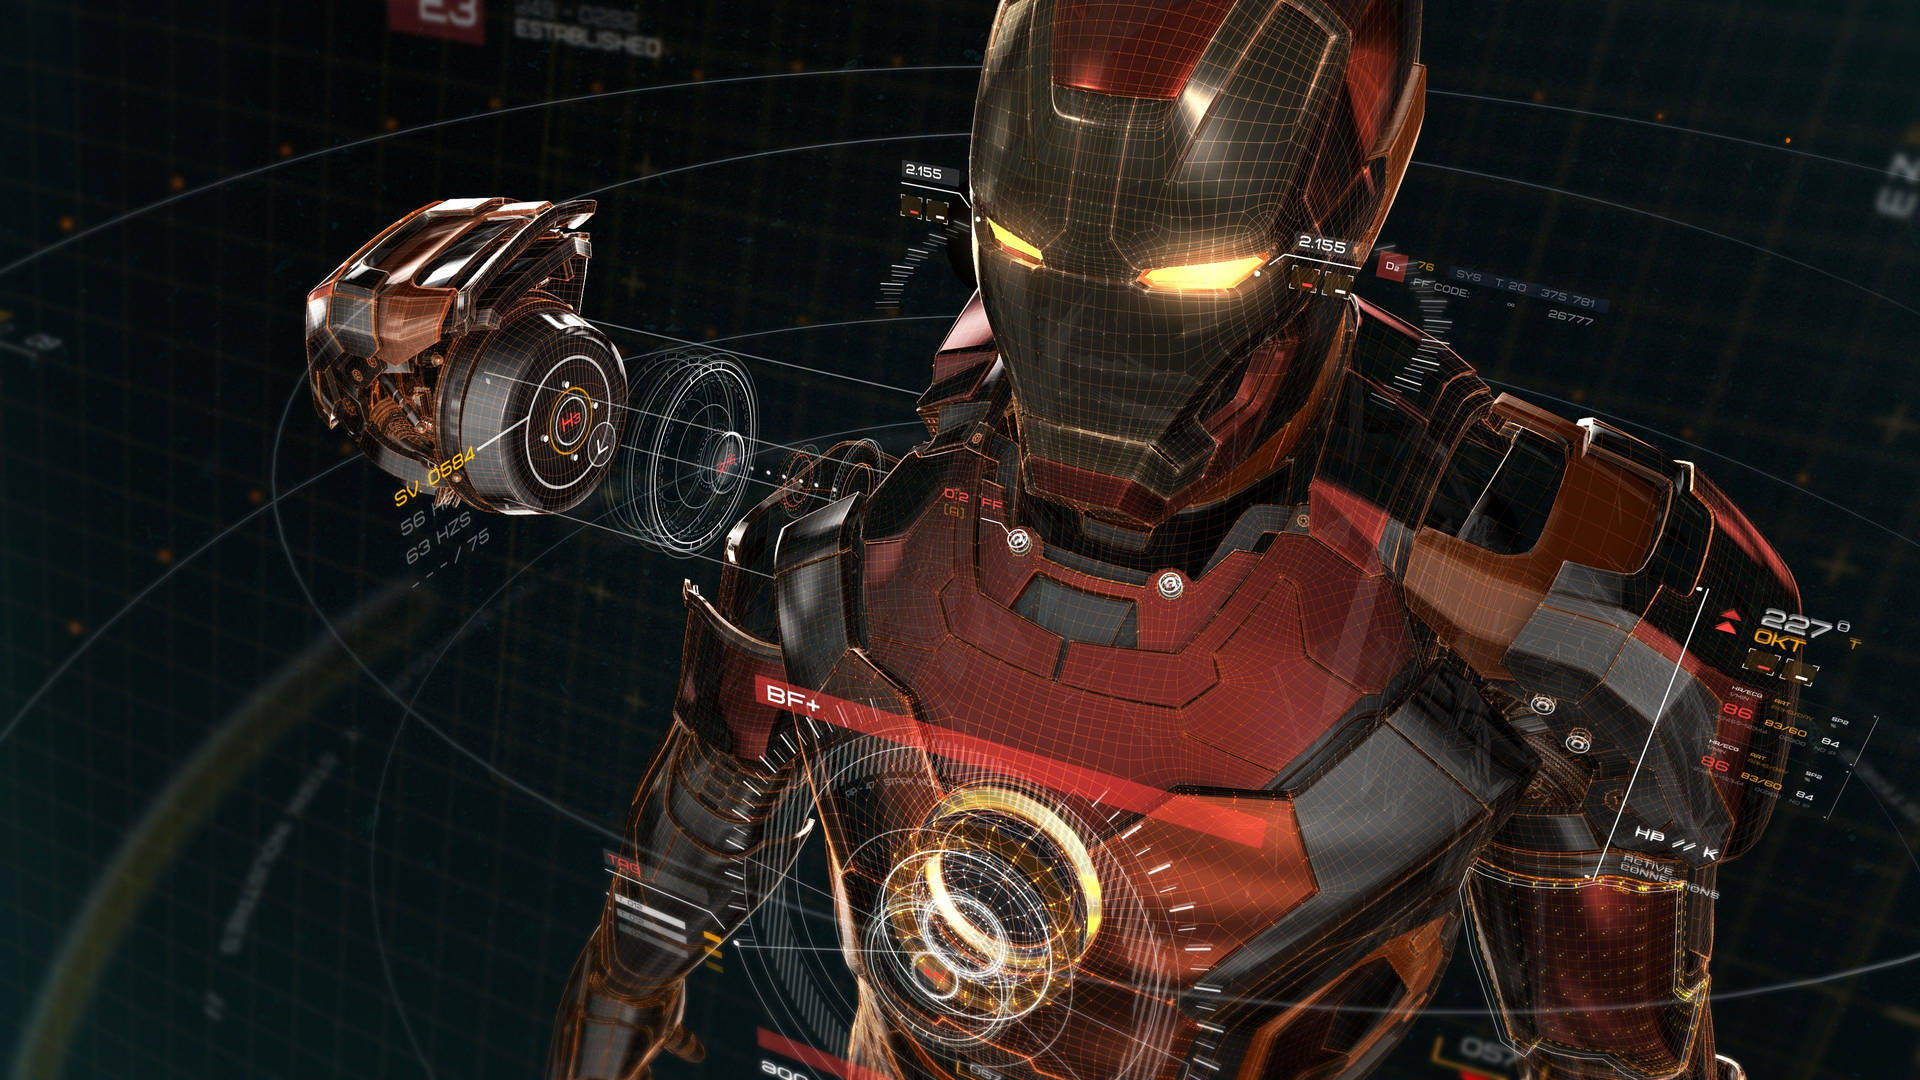 Armored Iron Man Full Hd Wallpaper